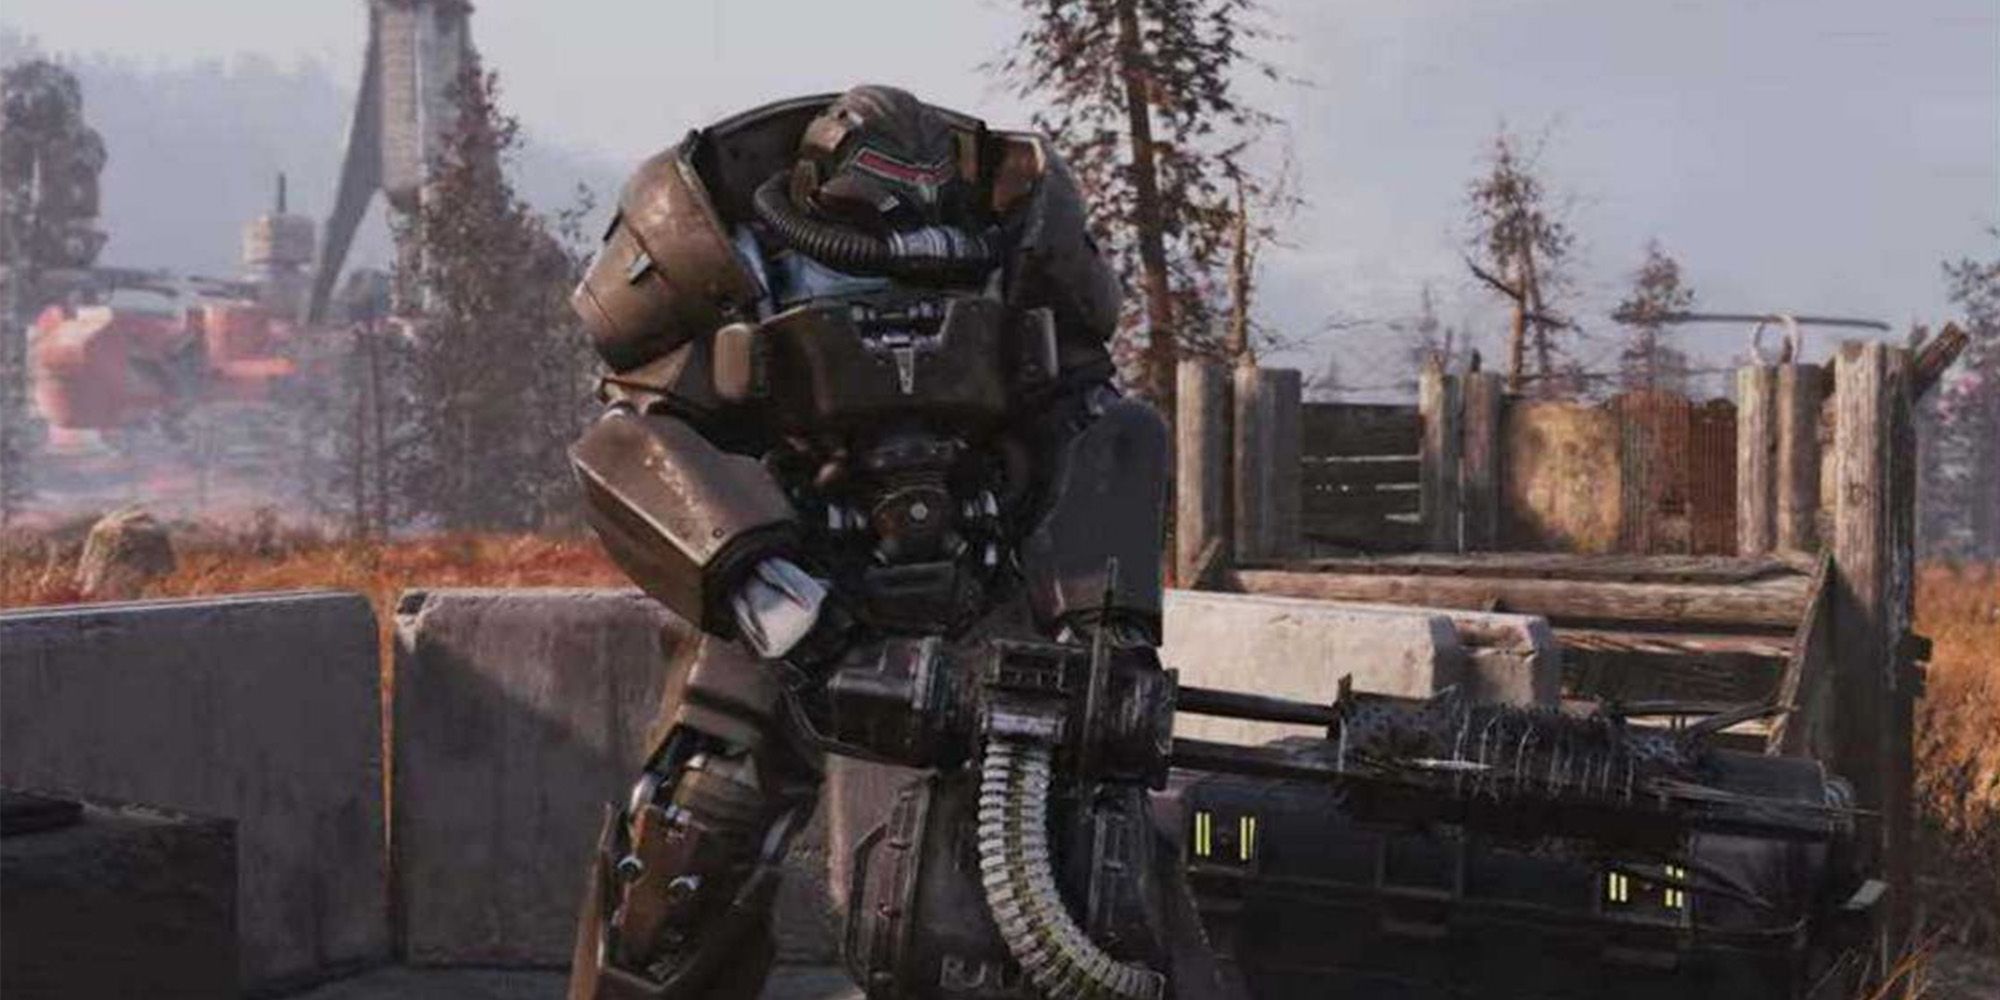 Hellcat Power Armor user wielding a Gatling gun in Fallout 76